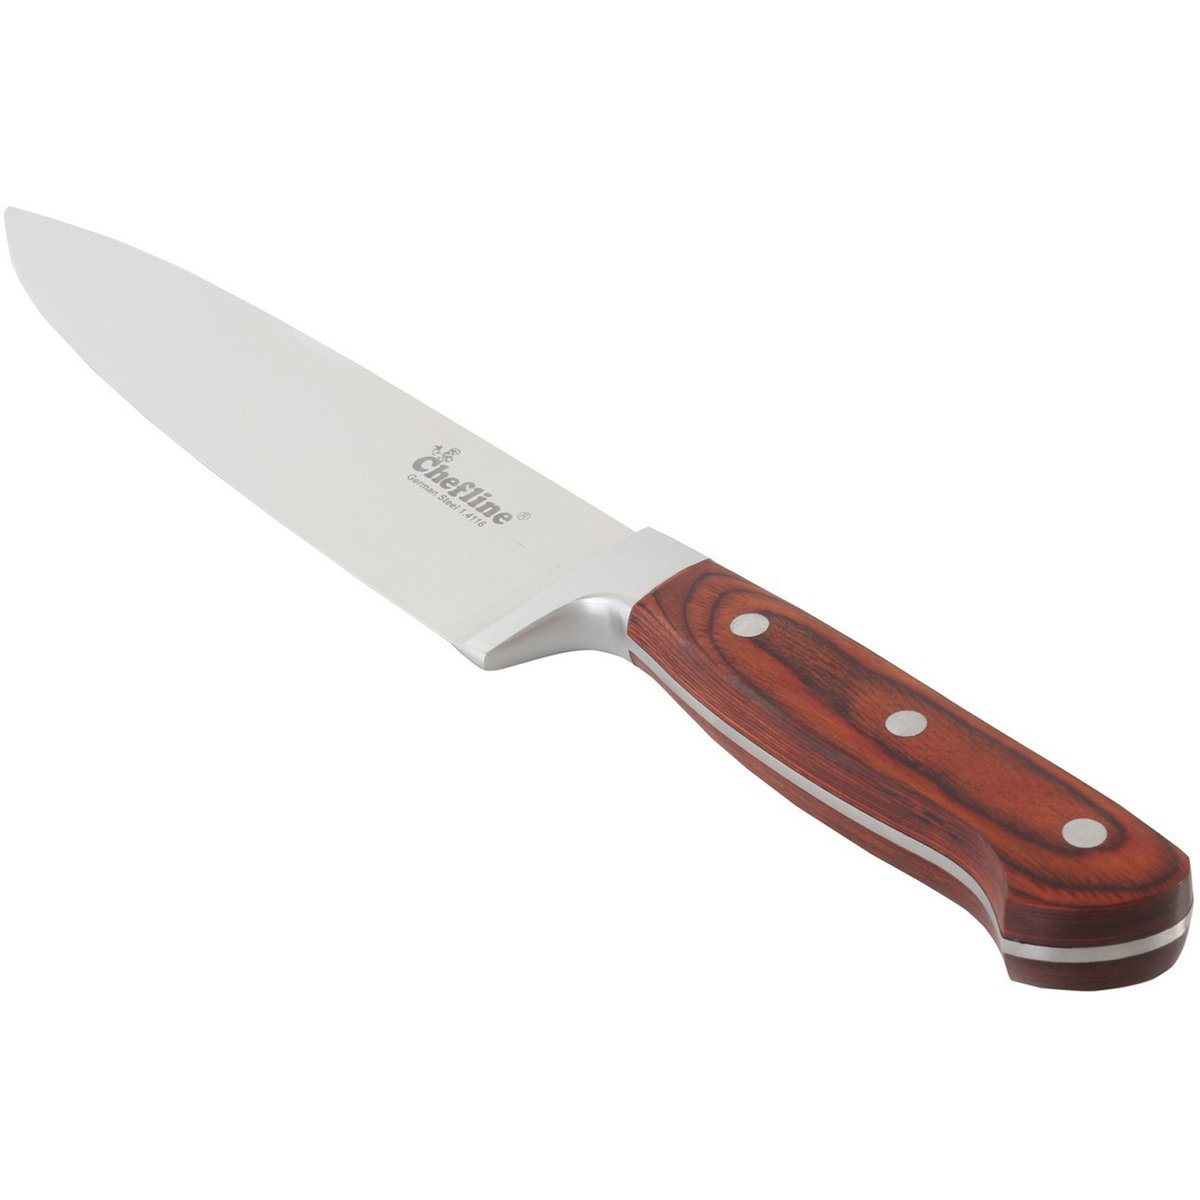 Chefline Knife CM003-01 8inch